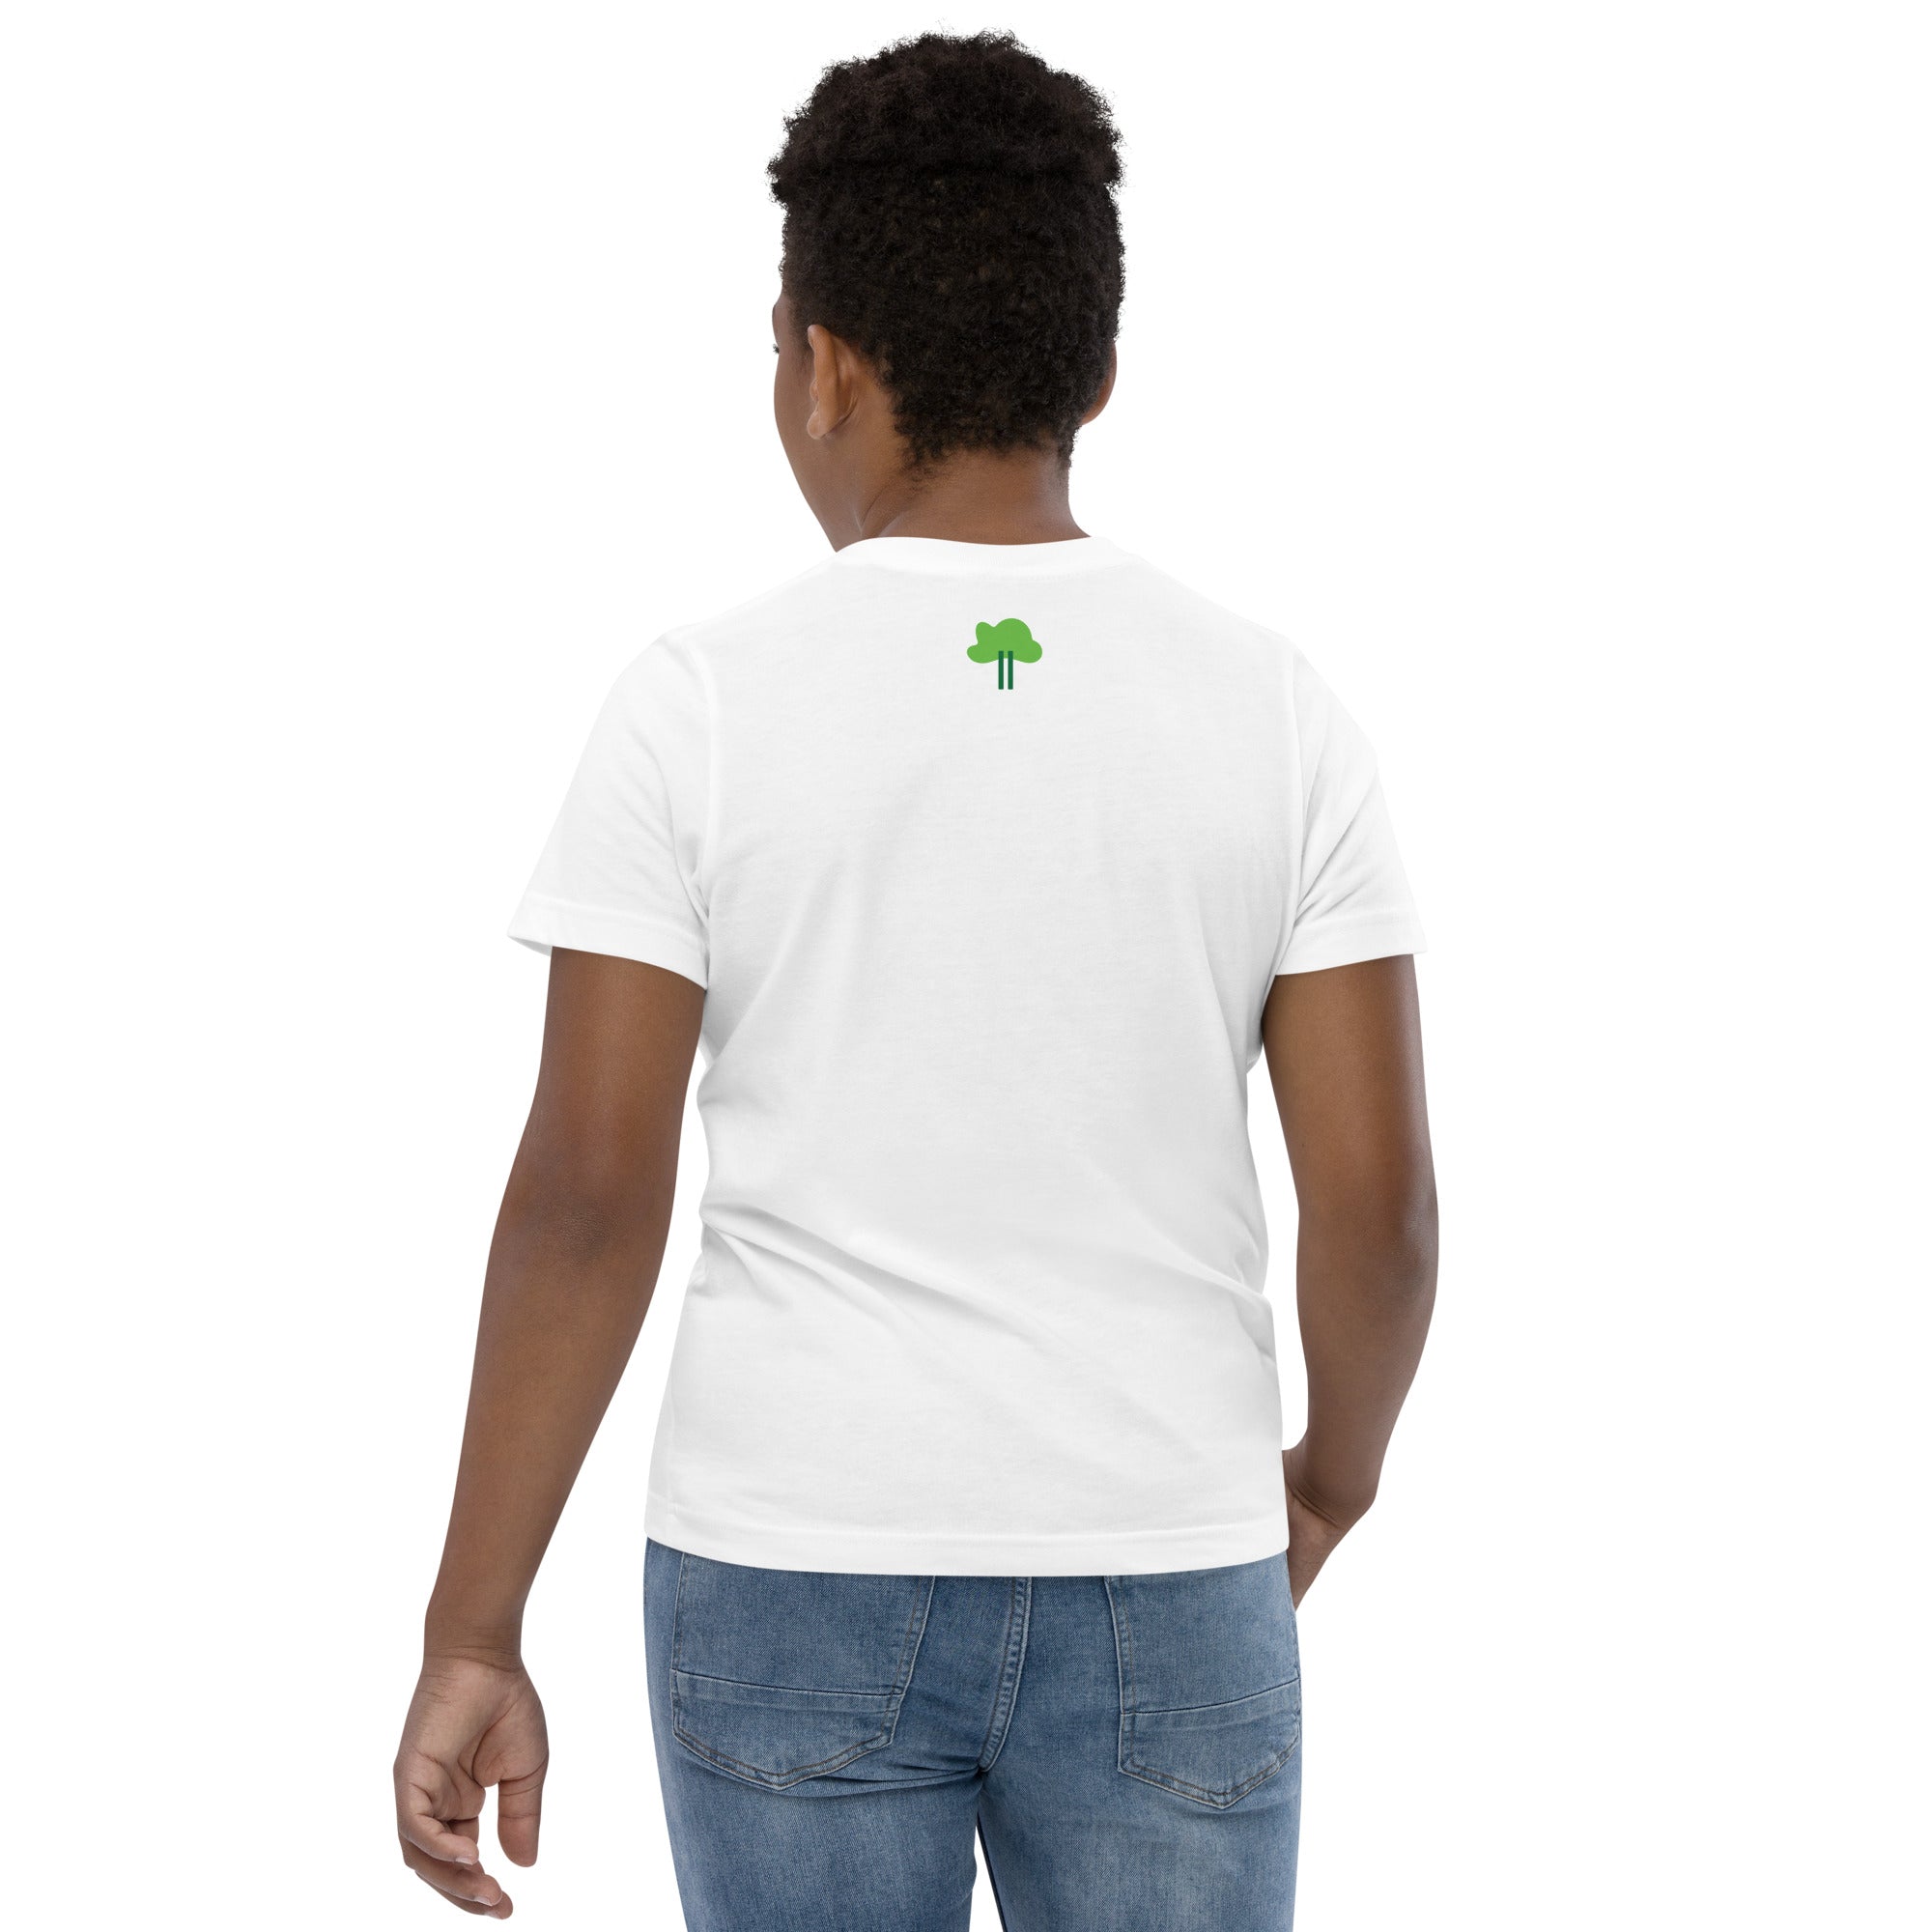 II Temp Sabana - K10 | Youth jersey t-shirt